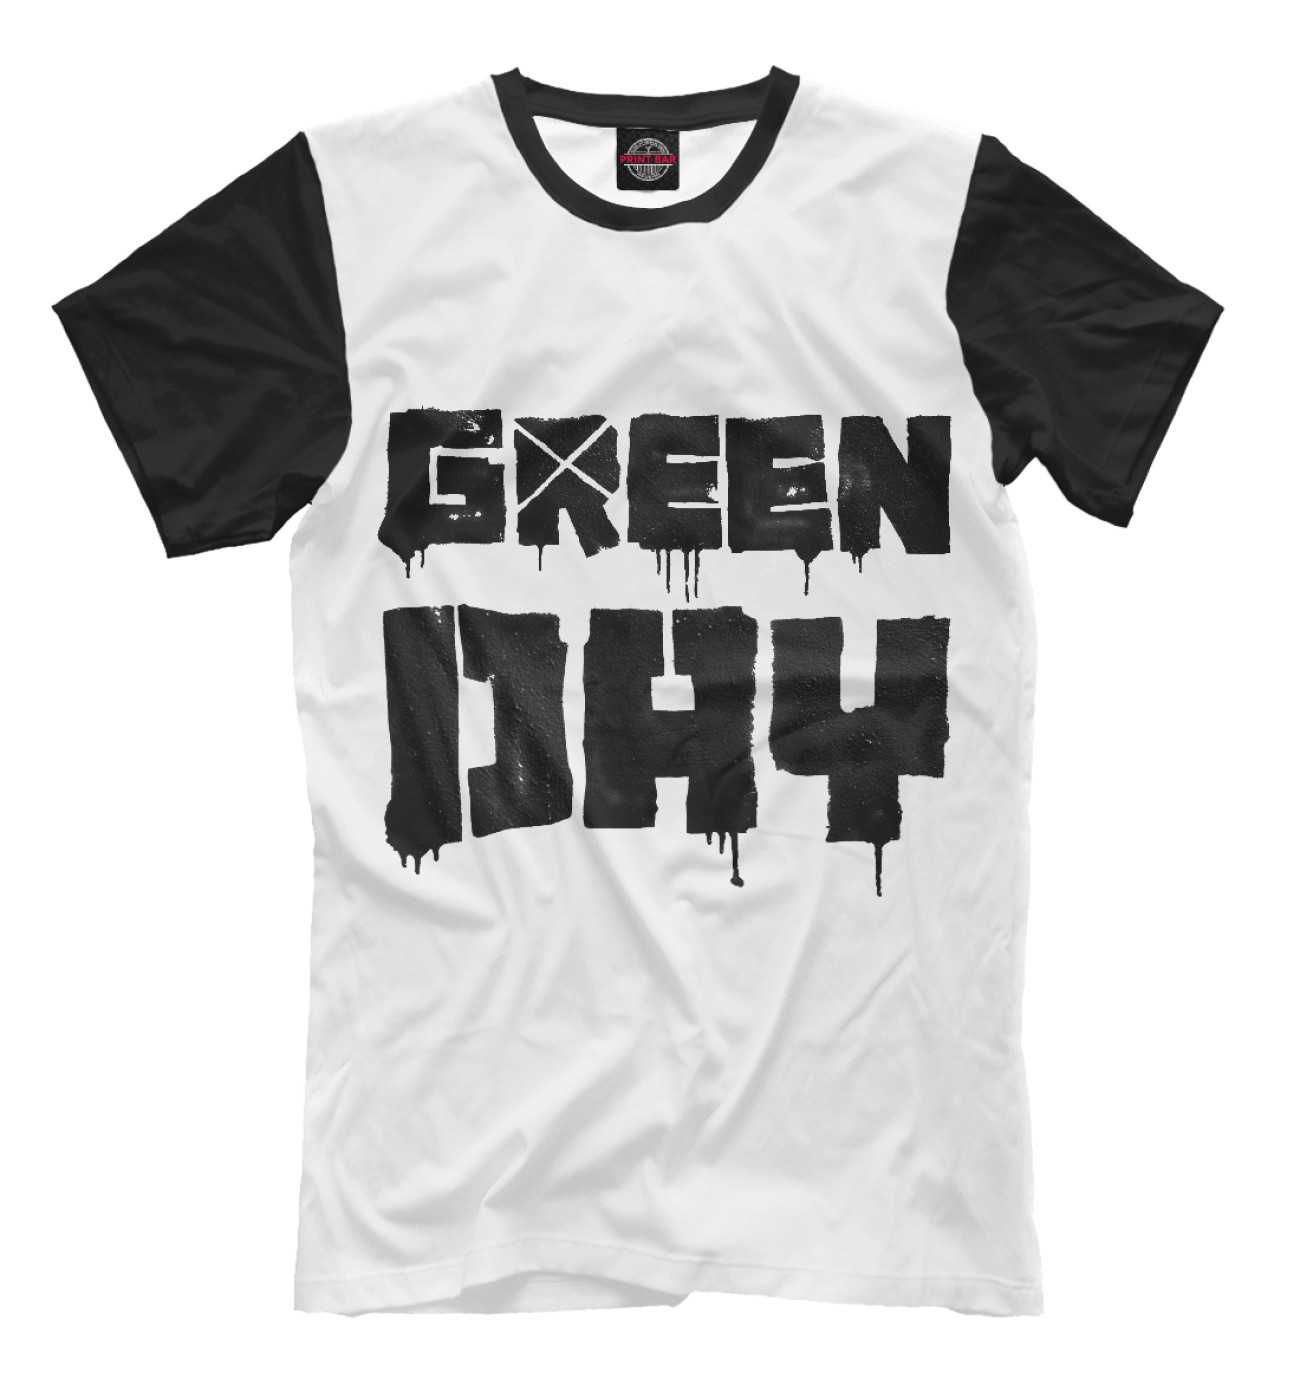 Мужская Футболка Green Day, артикул: GRE-547269-fut-2